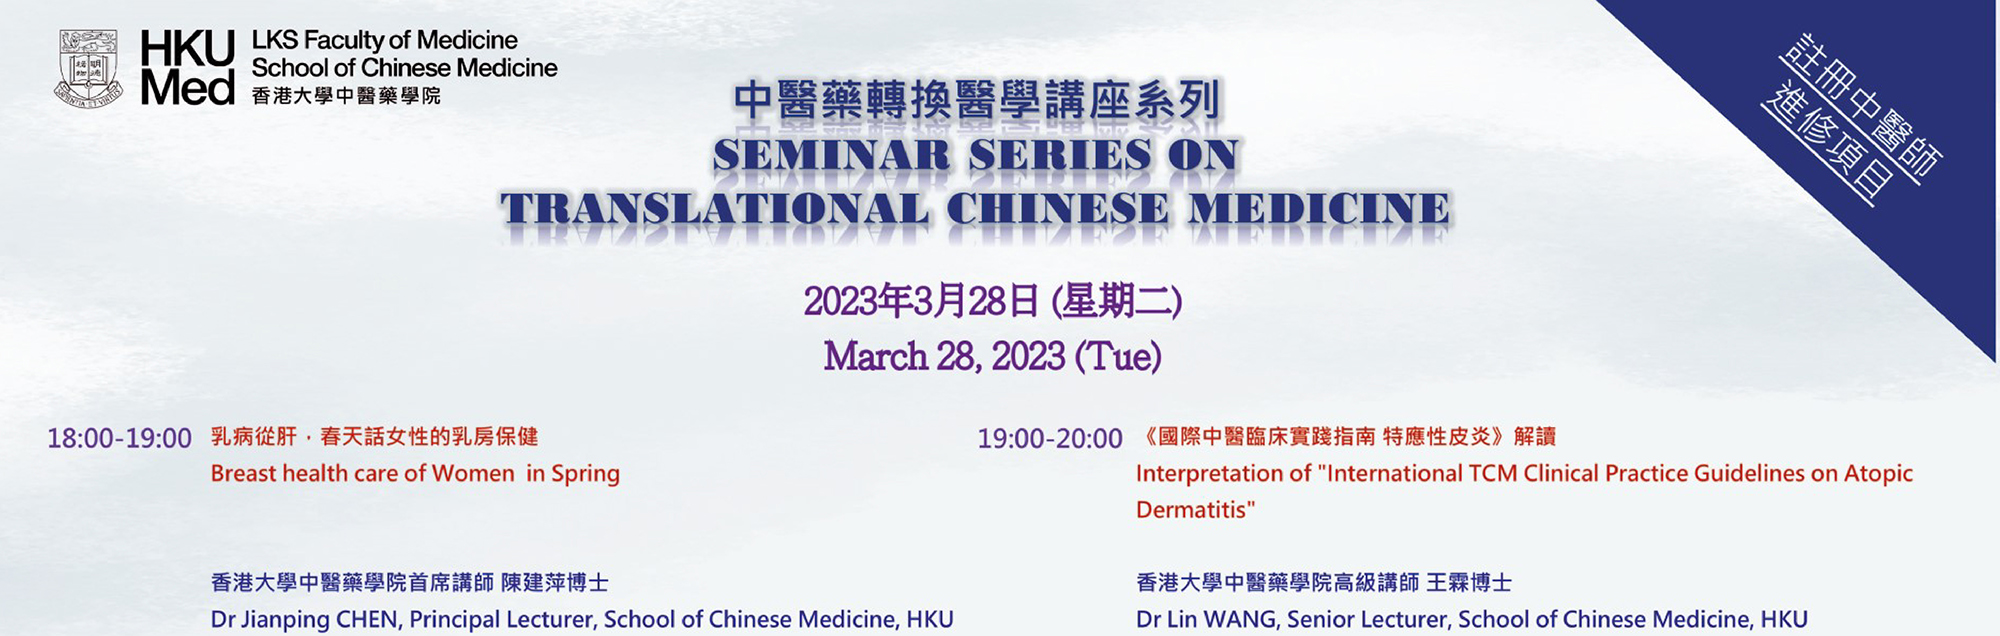 translational chinese medicine seminar 2023Feb28 chi